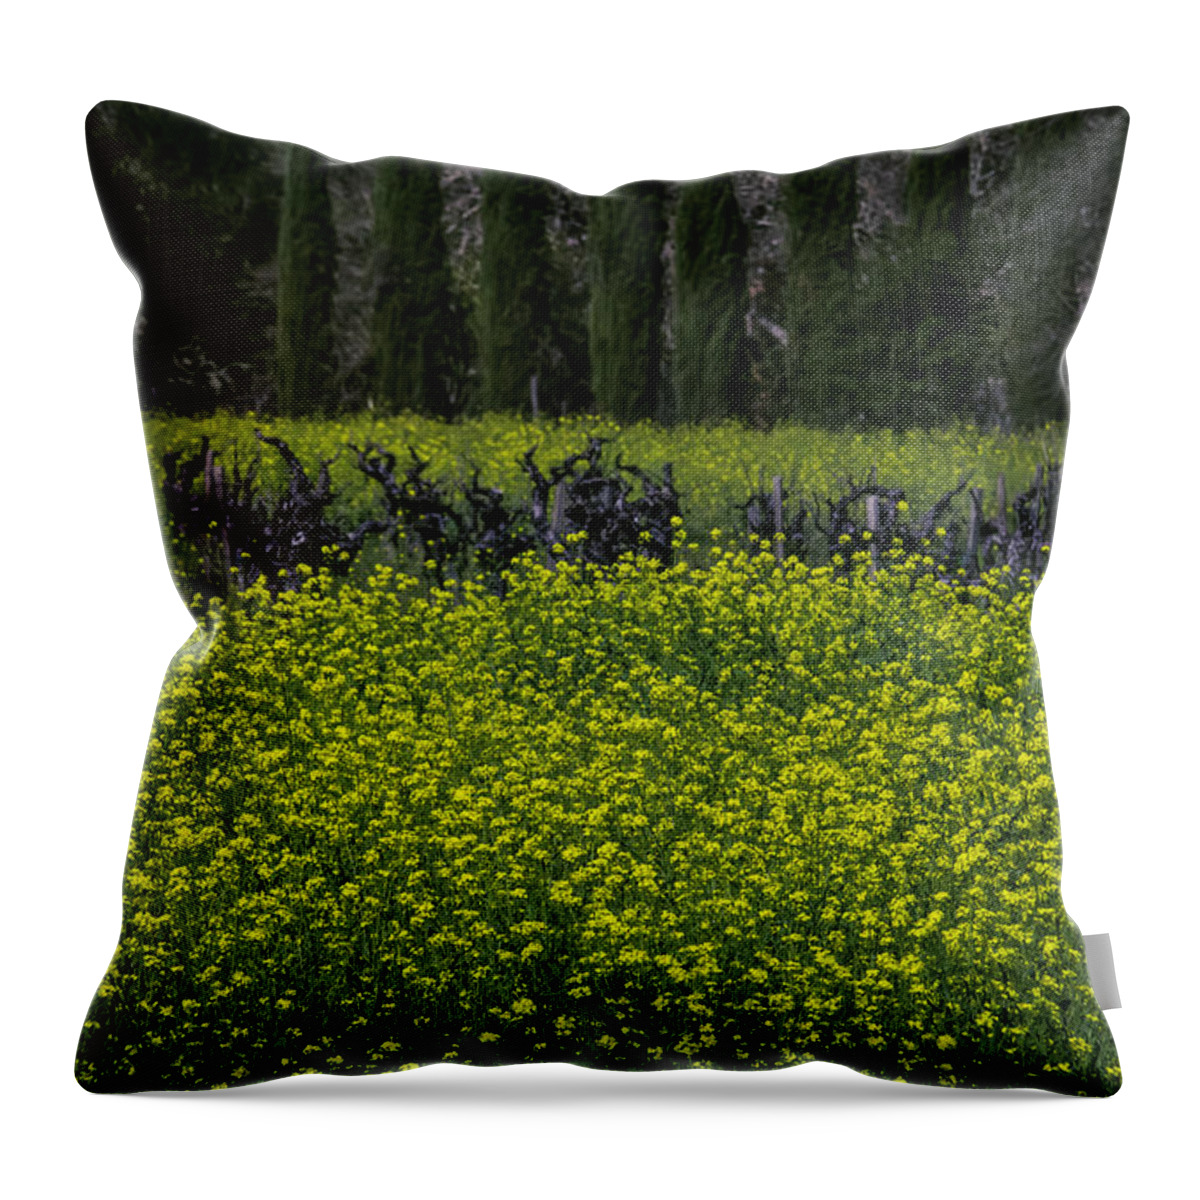 Mustard Grass Throw Pillow featuring the photograph Mustard Grass In An Old Vineyard by Garry Gay